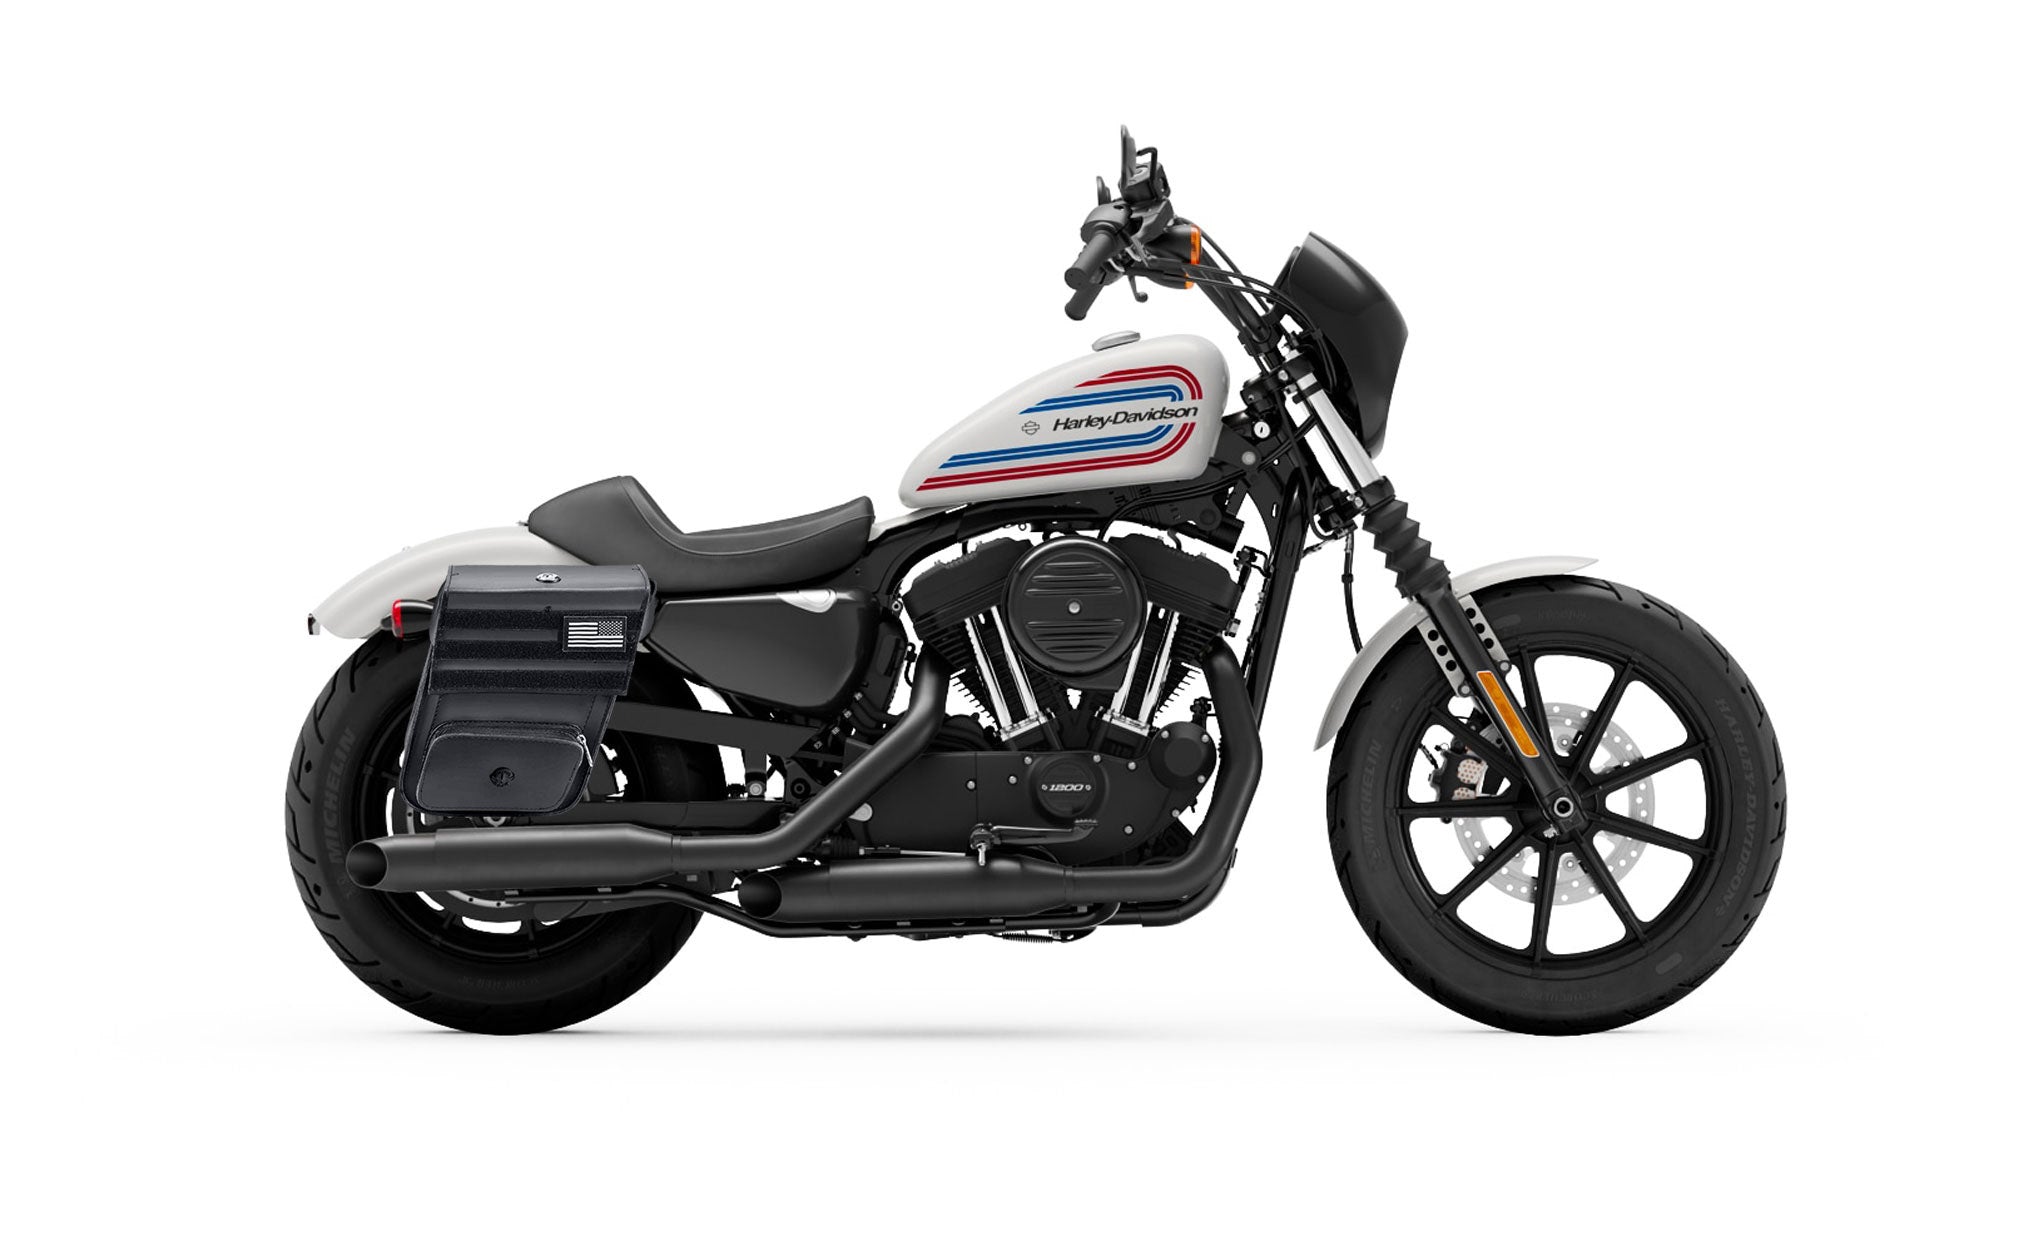 Viking Military Medium Leather Motorcycle Saddlebags For Harley Sportster 1200 Iron Xl1200Ns on Bike Photo @expand